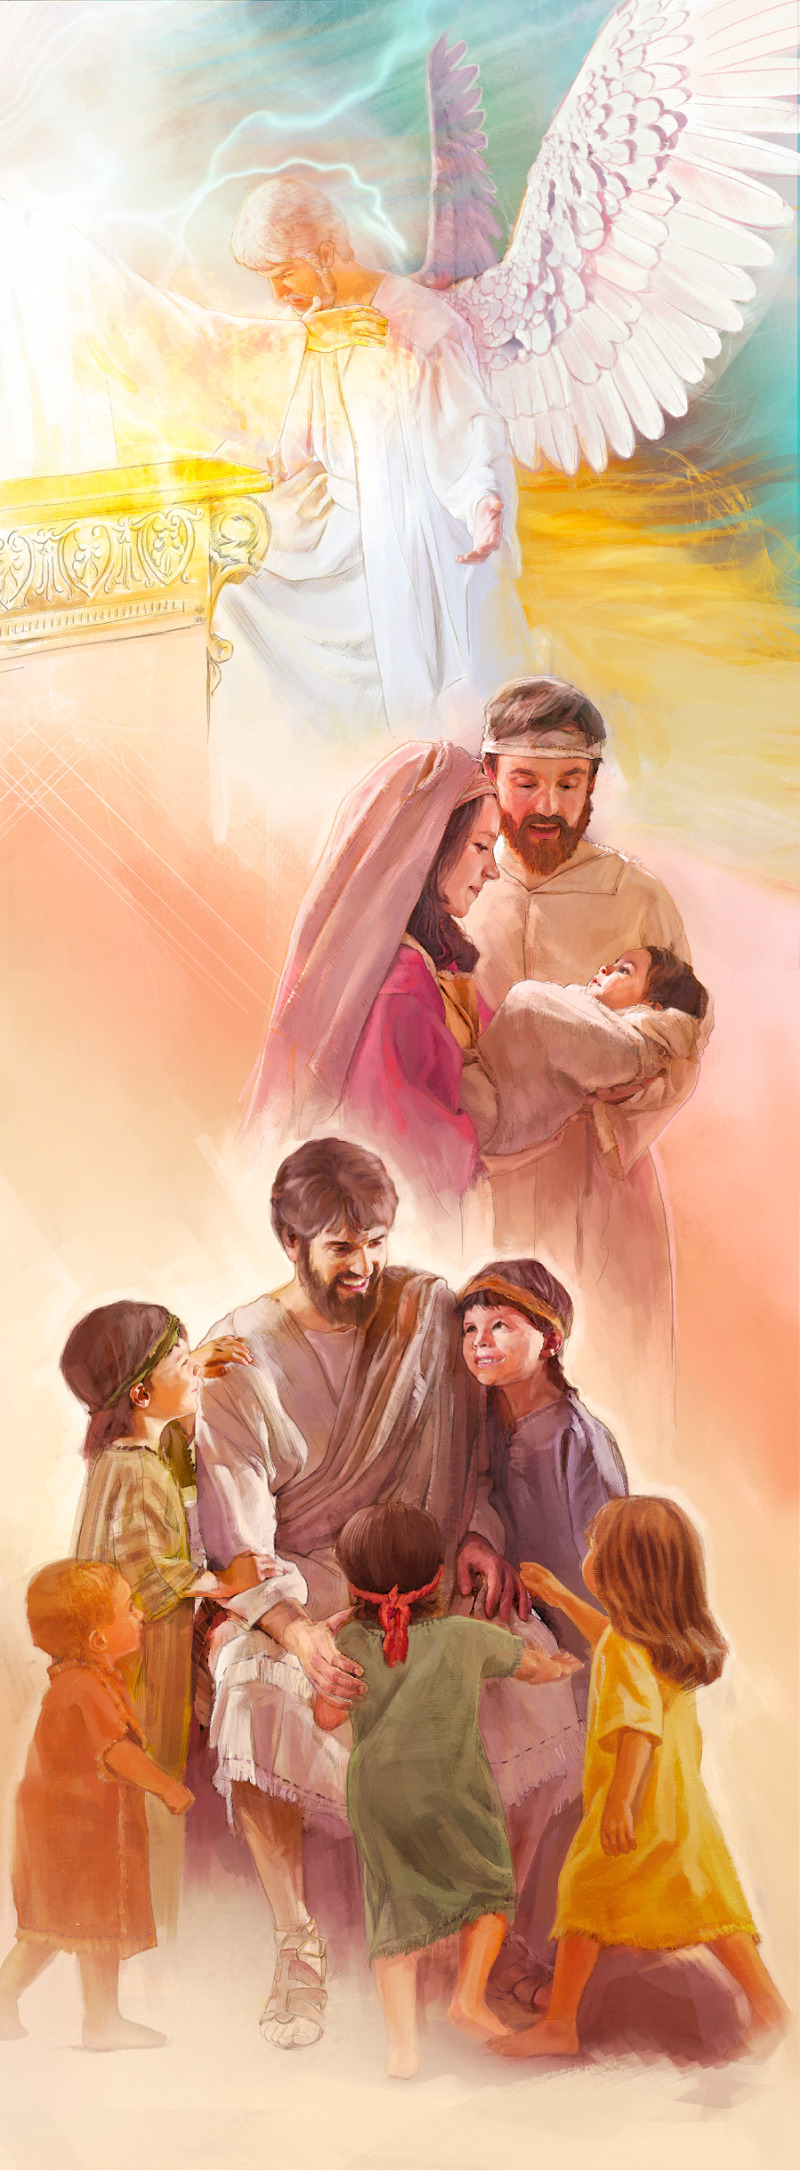 1. Jesus in heaven; 2. Baby Jesus with Mary and Joseph; 3. Jesus teaching children